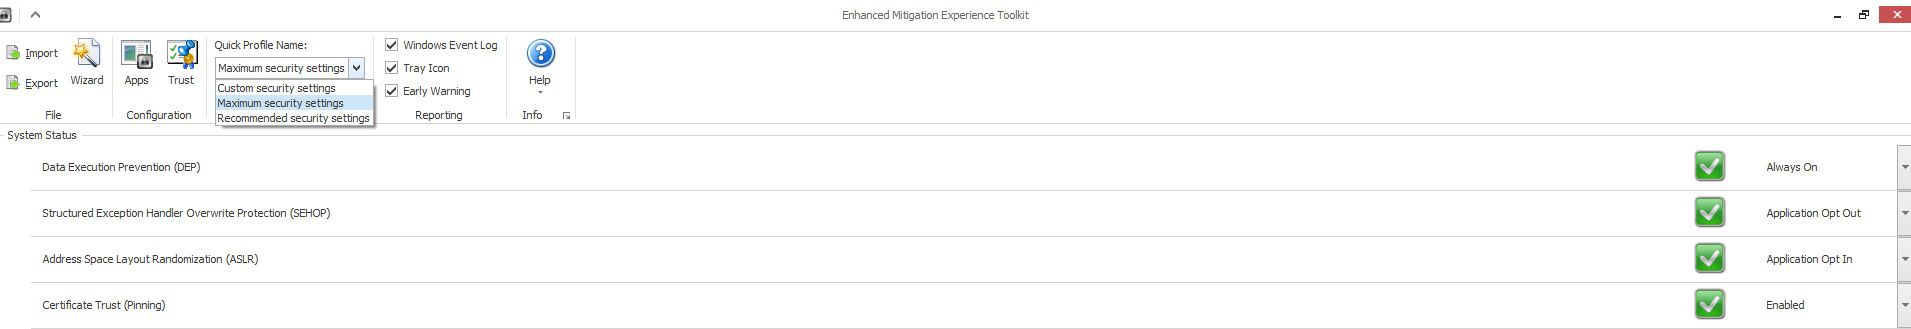 enhanced-mitigation-experience-toolkit-profile-80.jpg?nocache=1375865795818